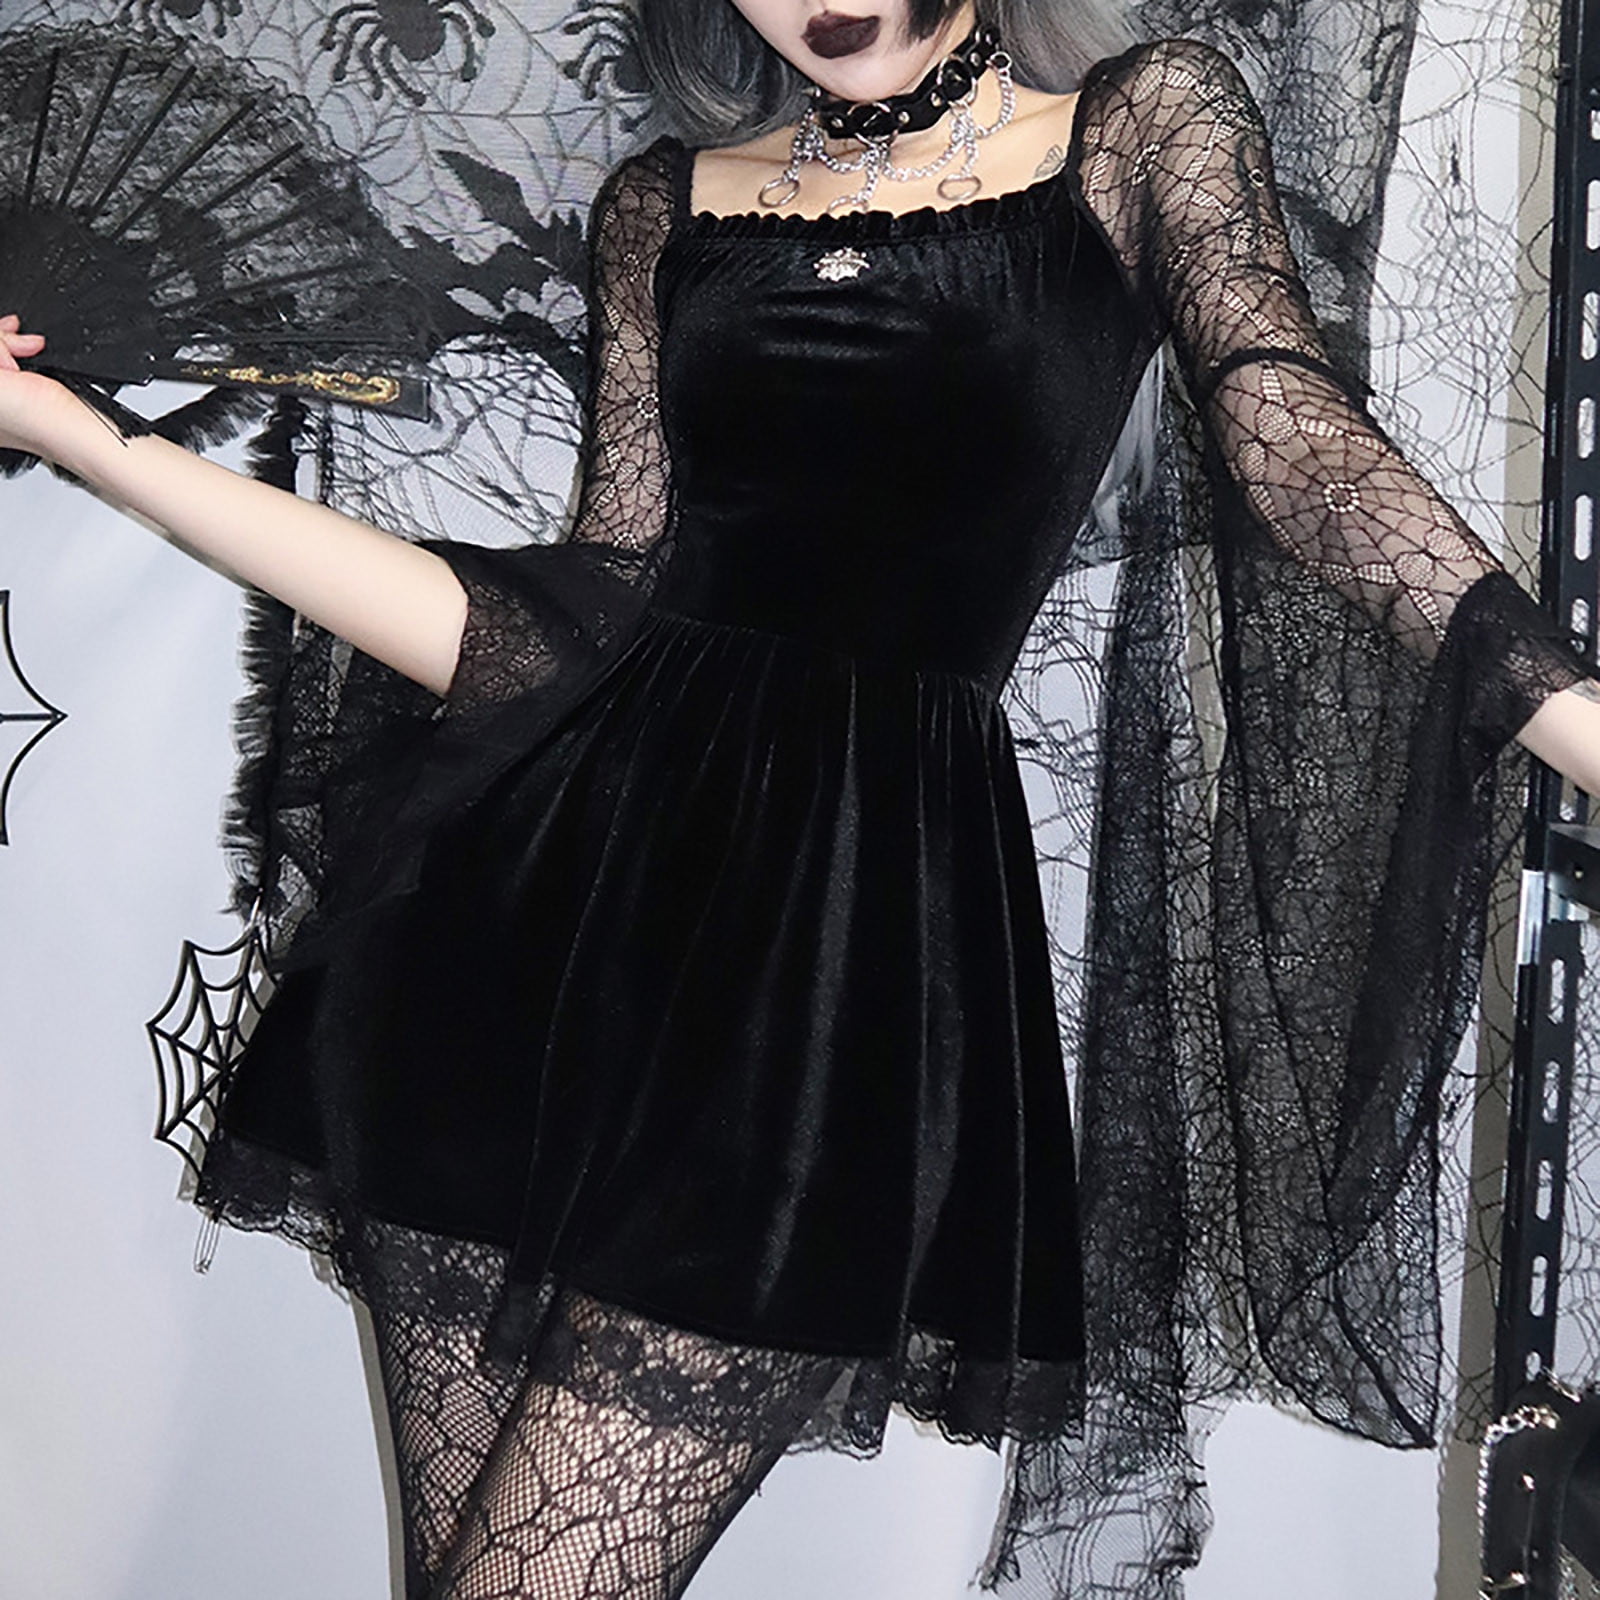 Gothic Fashion  Gothic outfits, Lolita fashion, Gothic fashion